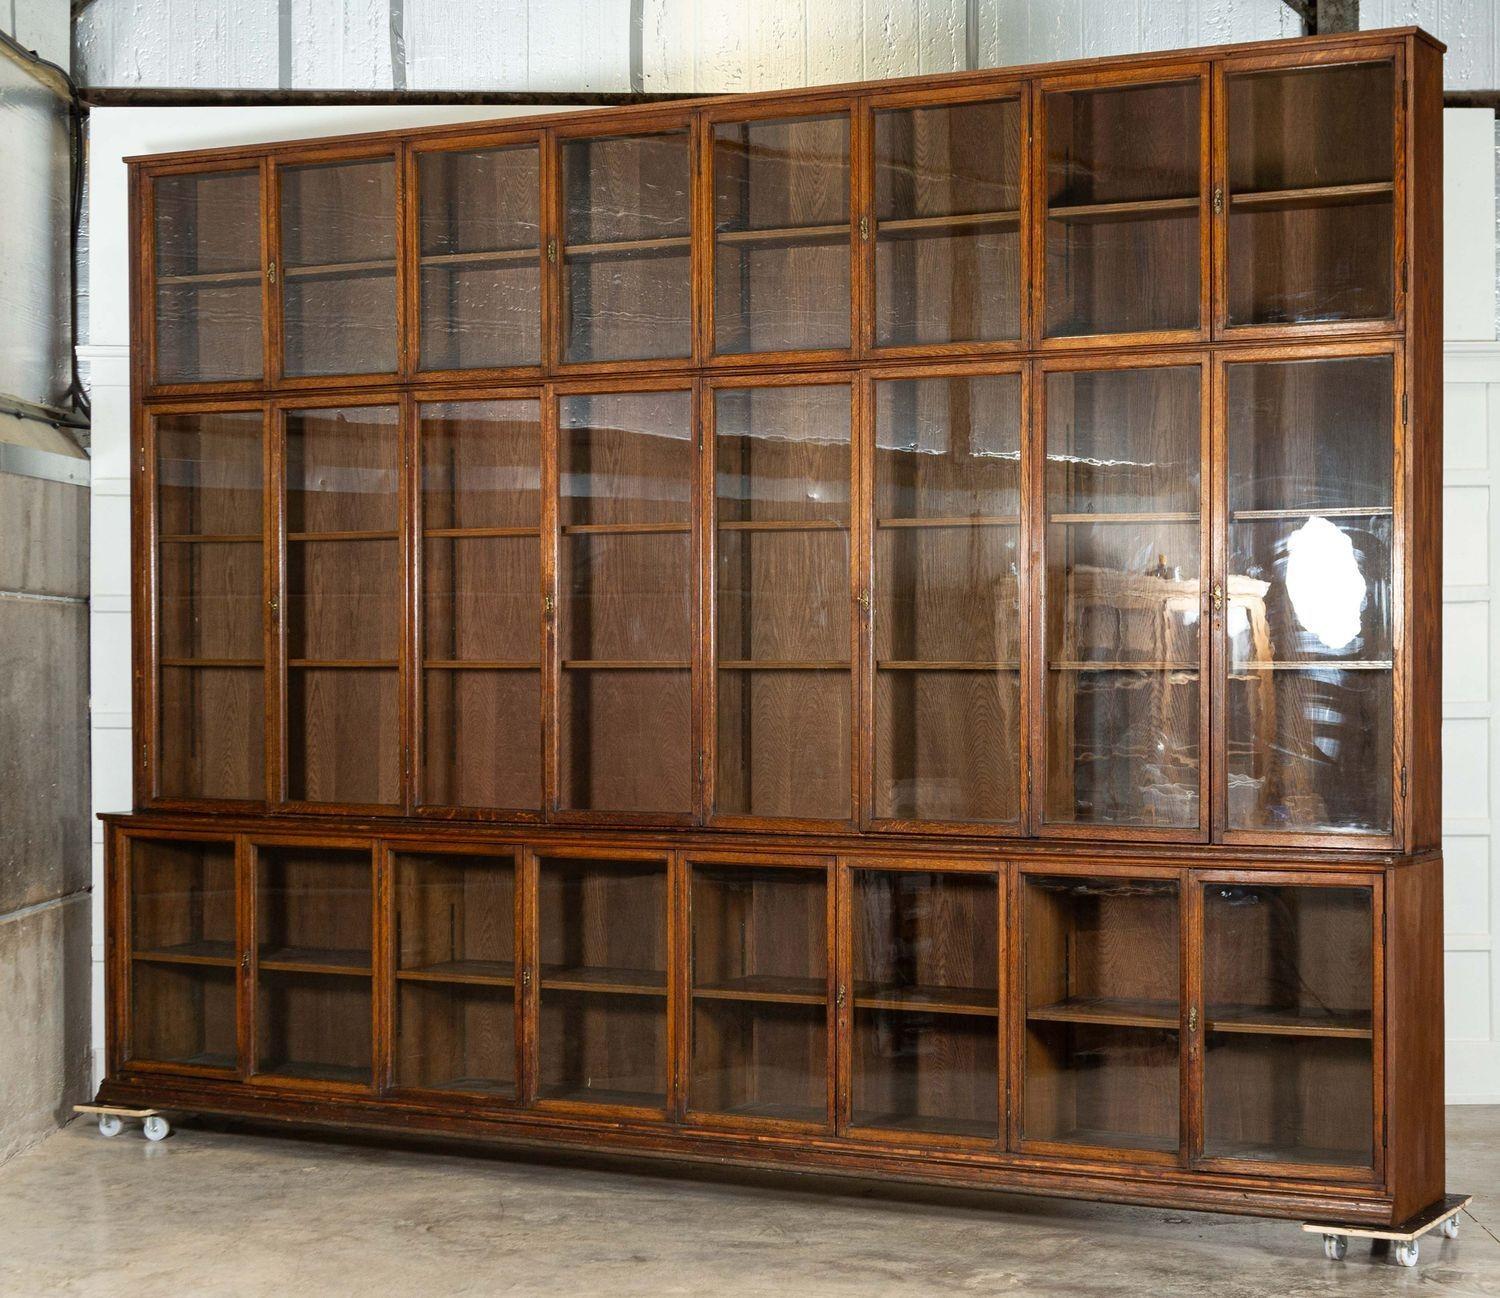 circa 1890
Monumental Oak Glazed Haberdashery Bookcase Cabinet
Provenance: St James's, London.
An exceptional example
sku 1788A
Base W437 x D45 x H96 cm
Top W457 x D28 x H216 cm
Together W457 x D45 x H312 cm
Weight 260 Kg